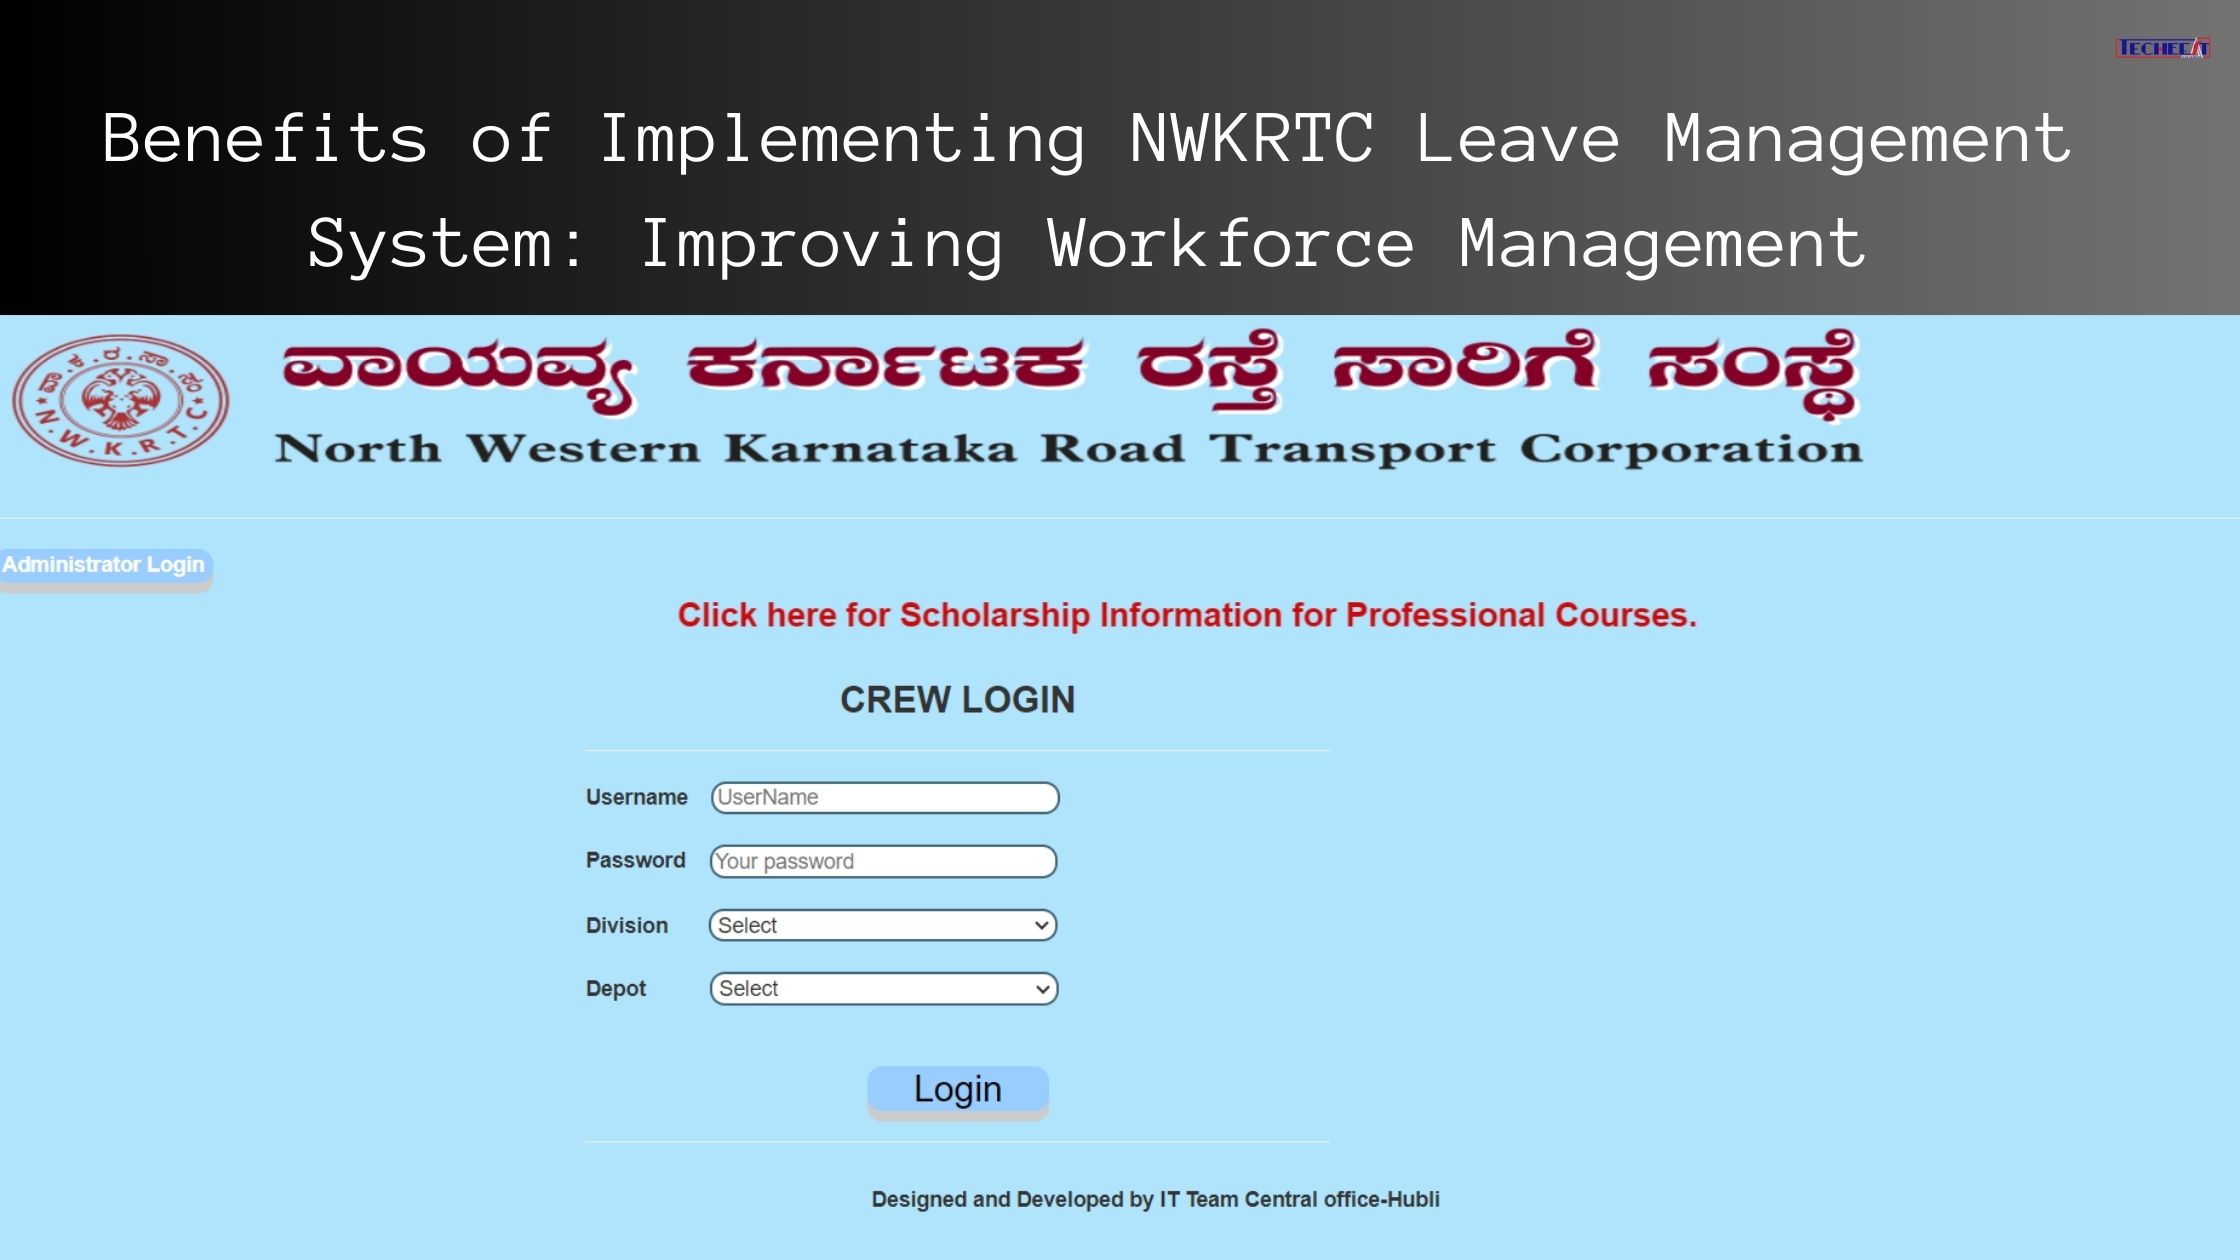 Benefits of Implementing NWKRTC Leave Management System Improving Workforce Management